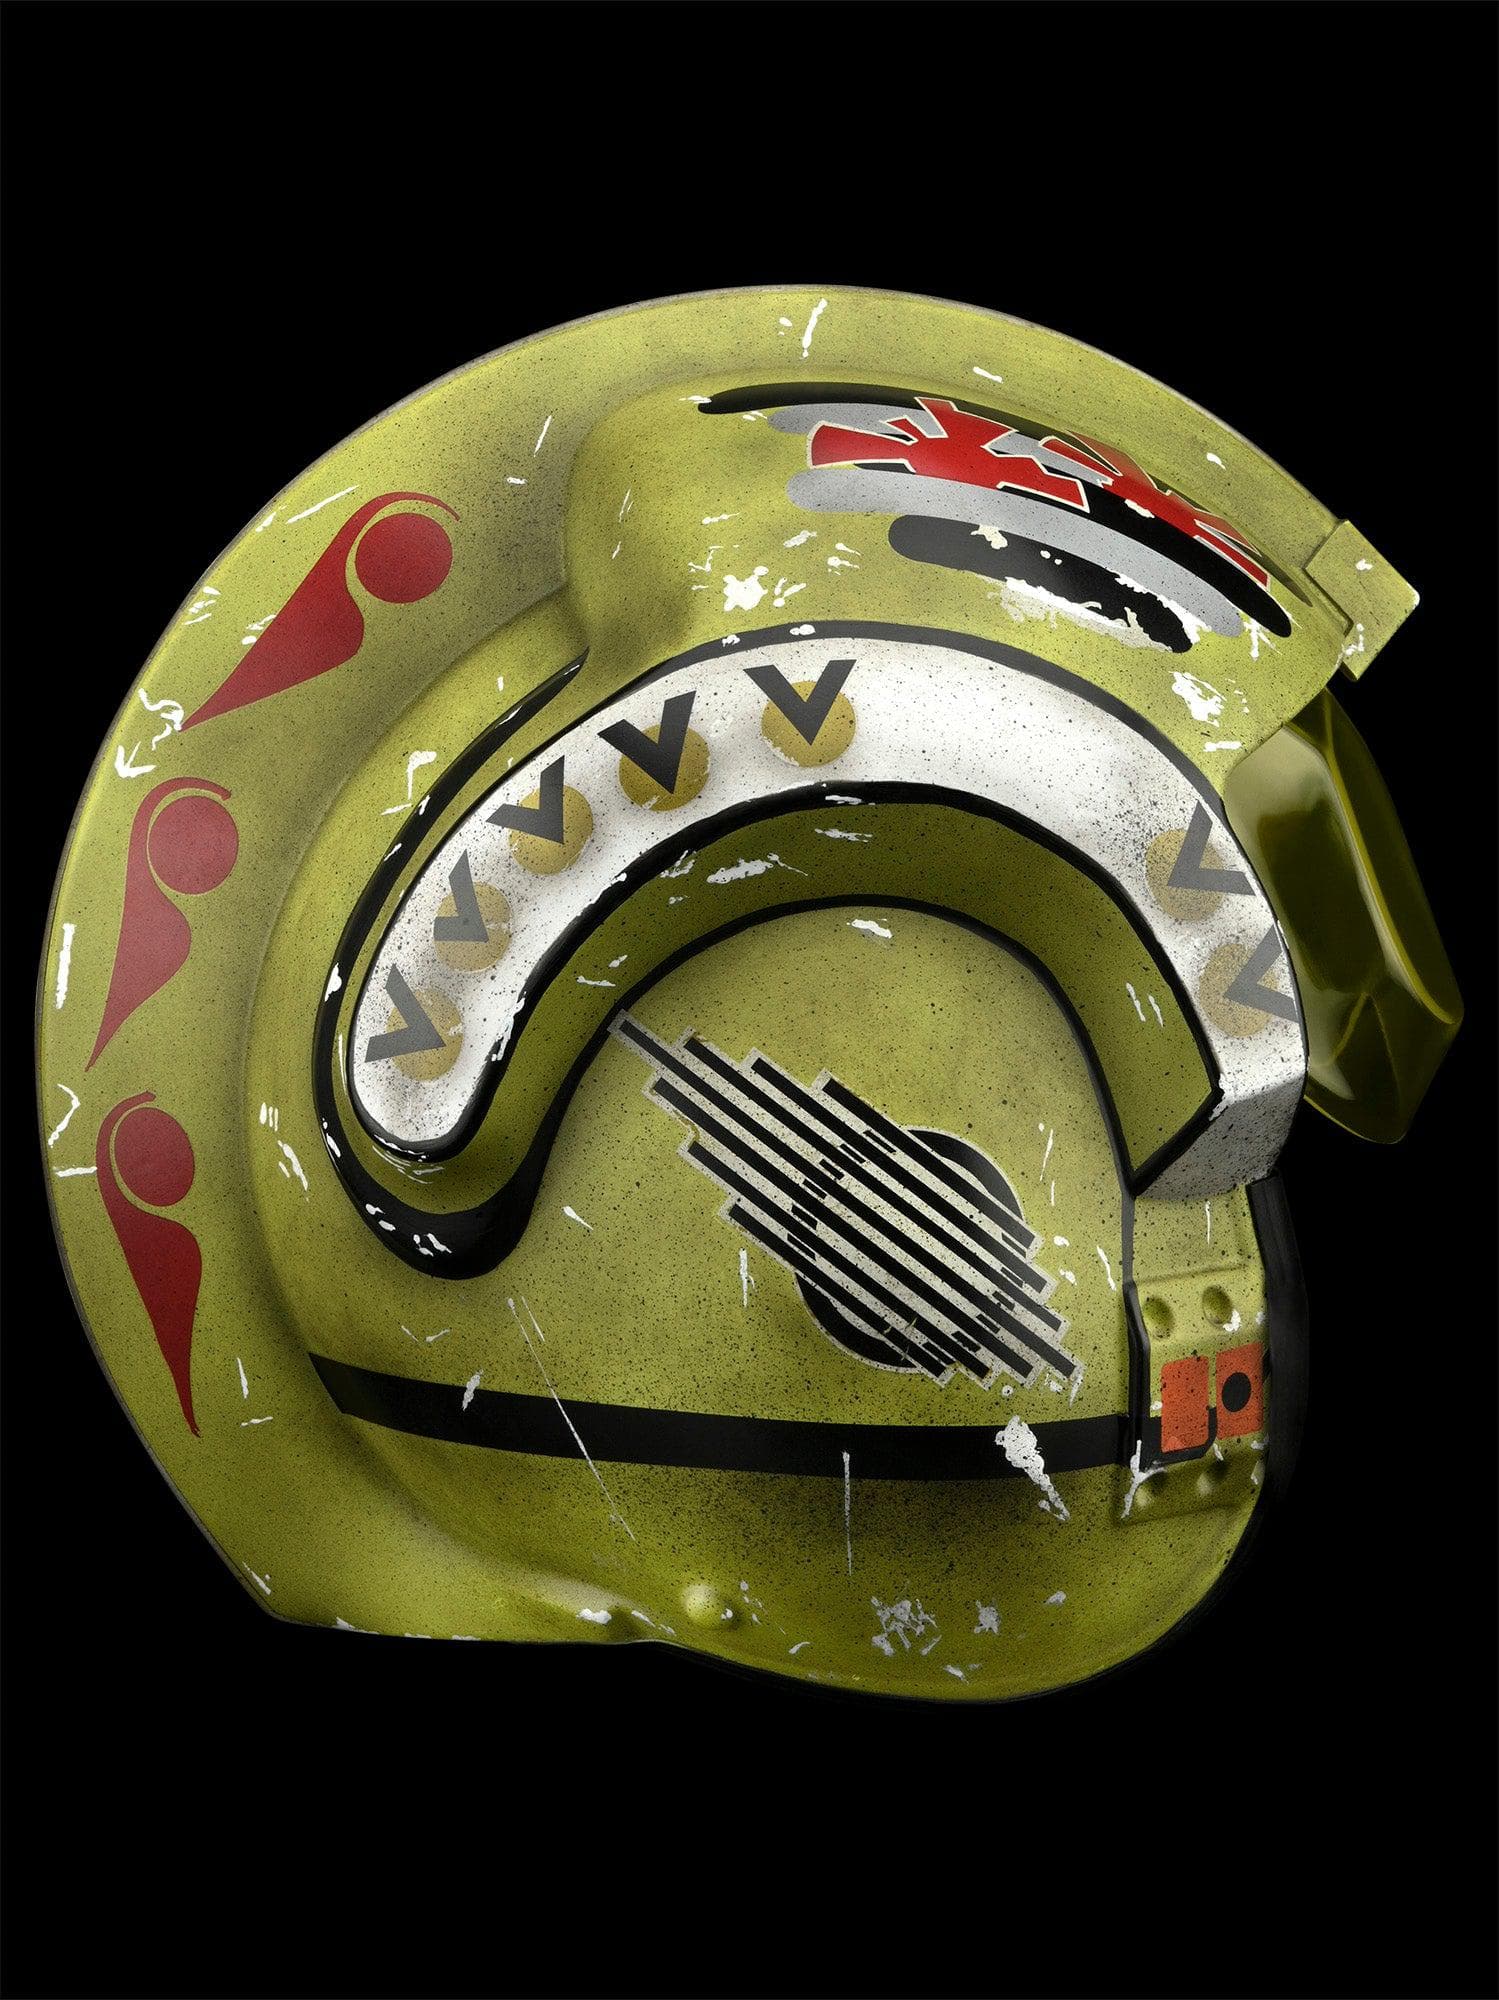 Denuo Novo Star Wars Red Leader X-wing Helmet Accessory - costumes.com